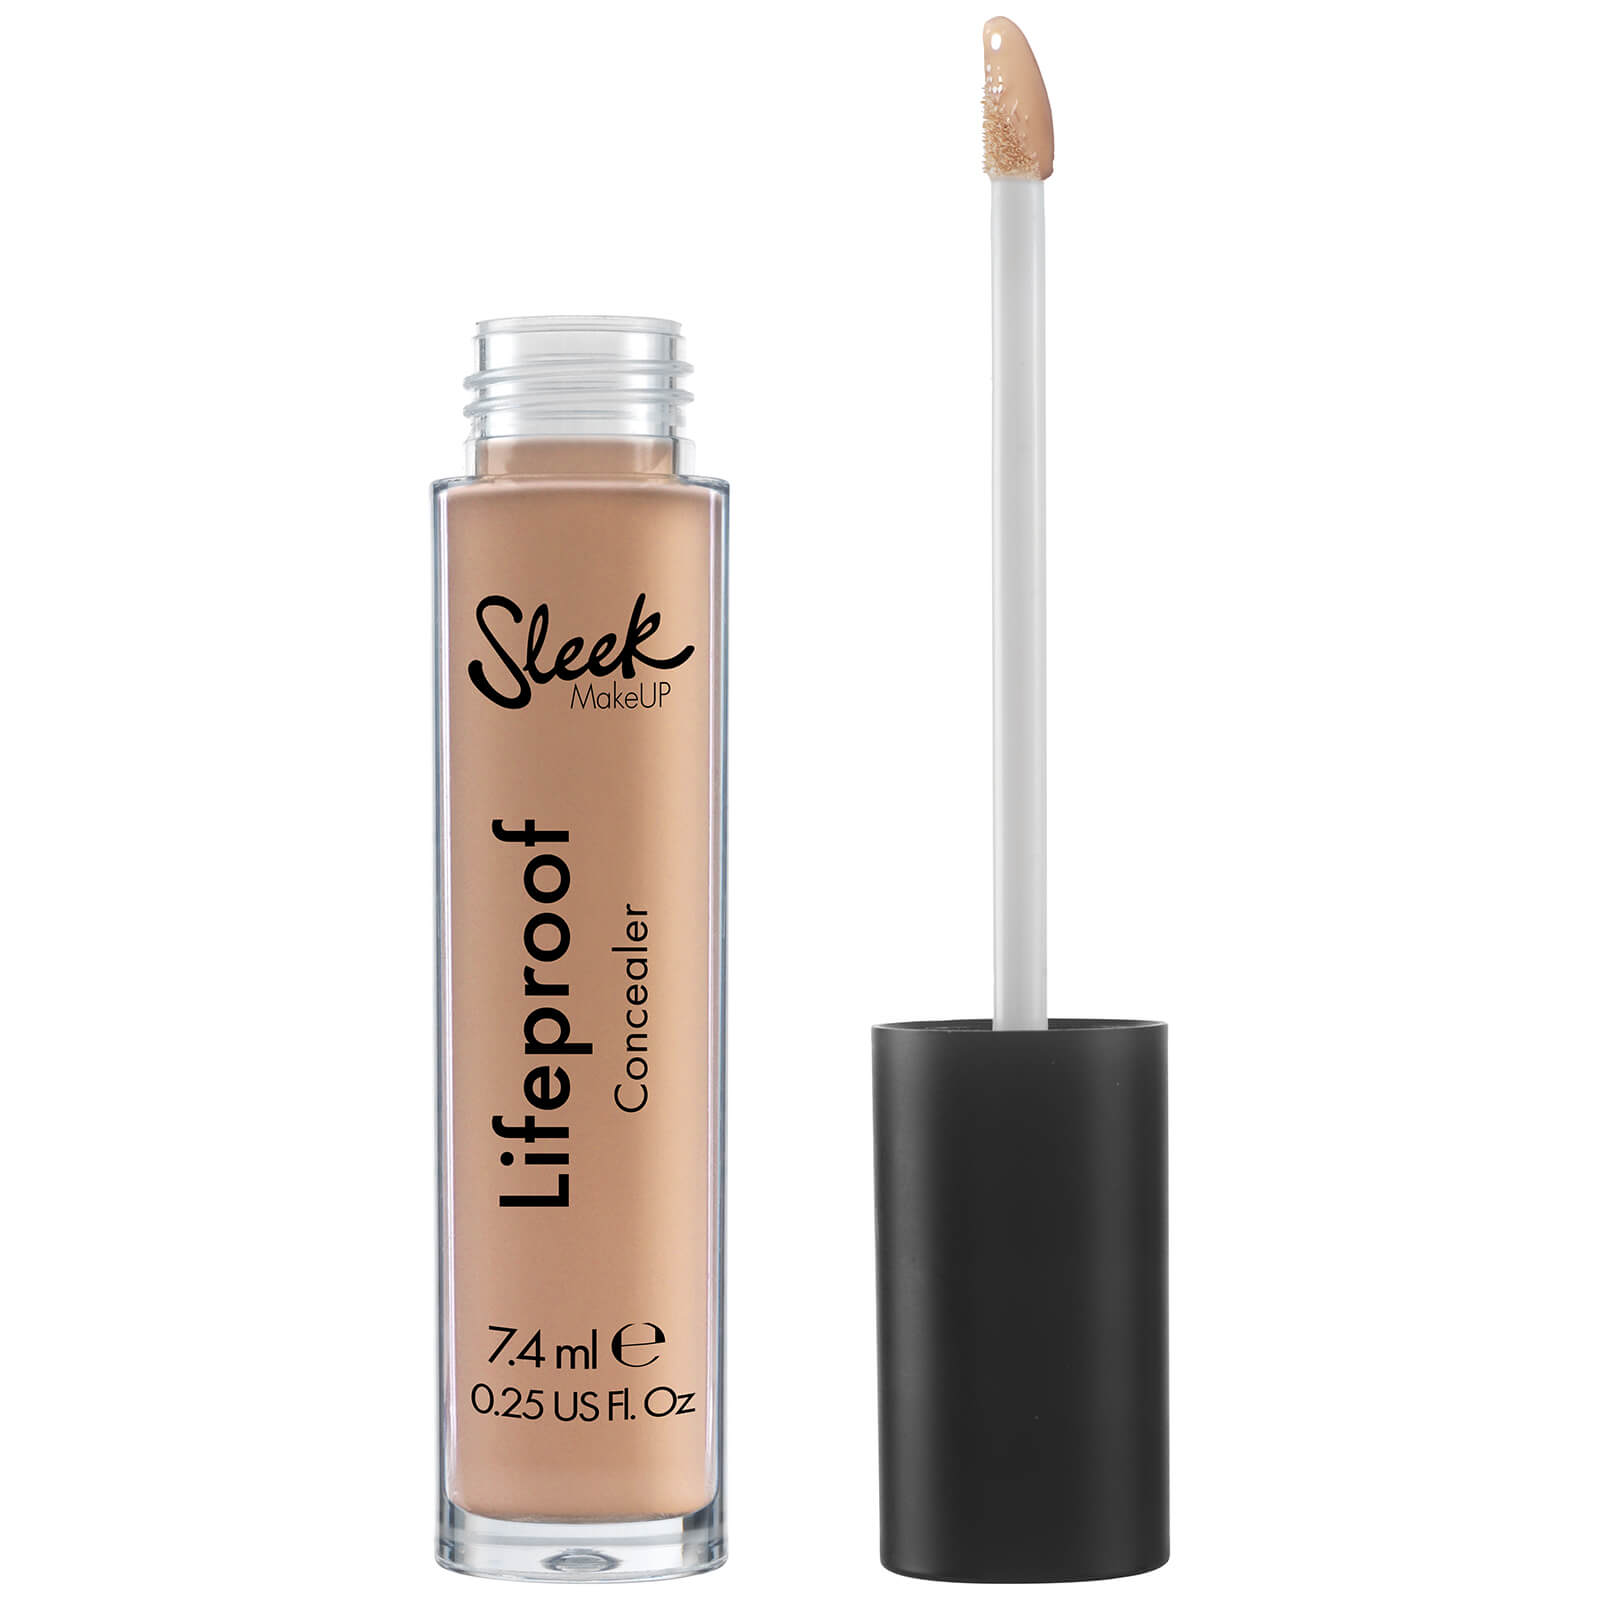 Sleek Makeup Lifeproof Concealer 7.4Ml (Various Shades) - Vanilla Chai (04)